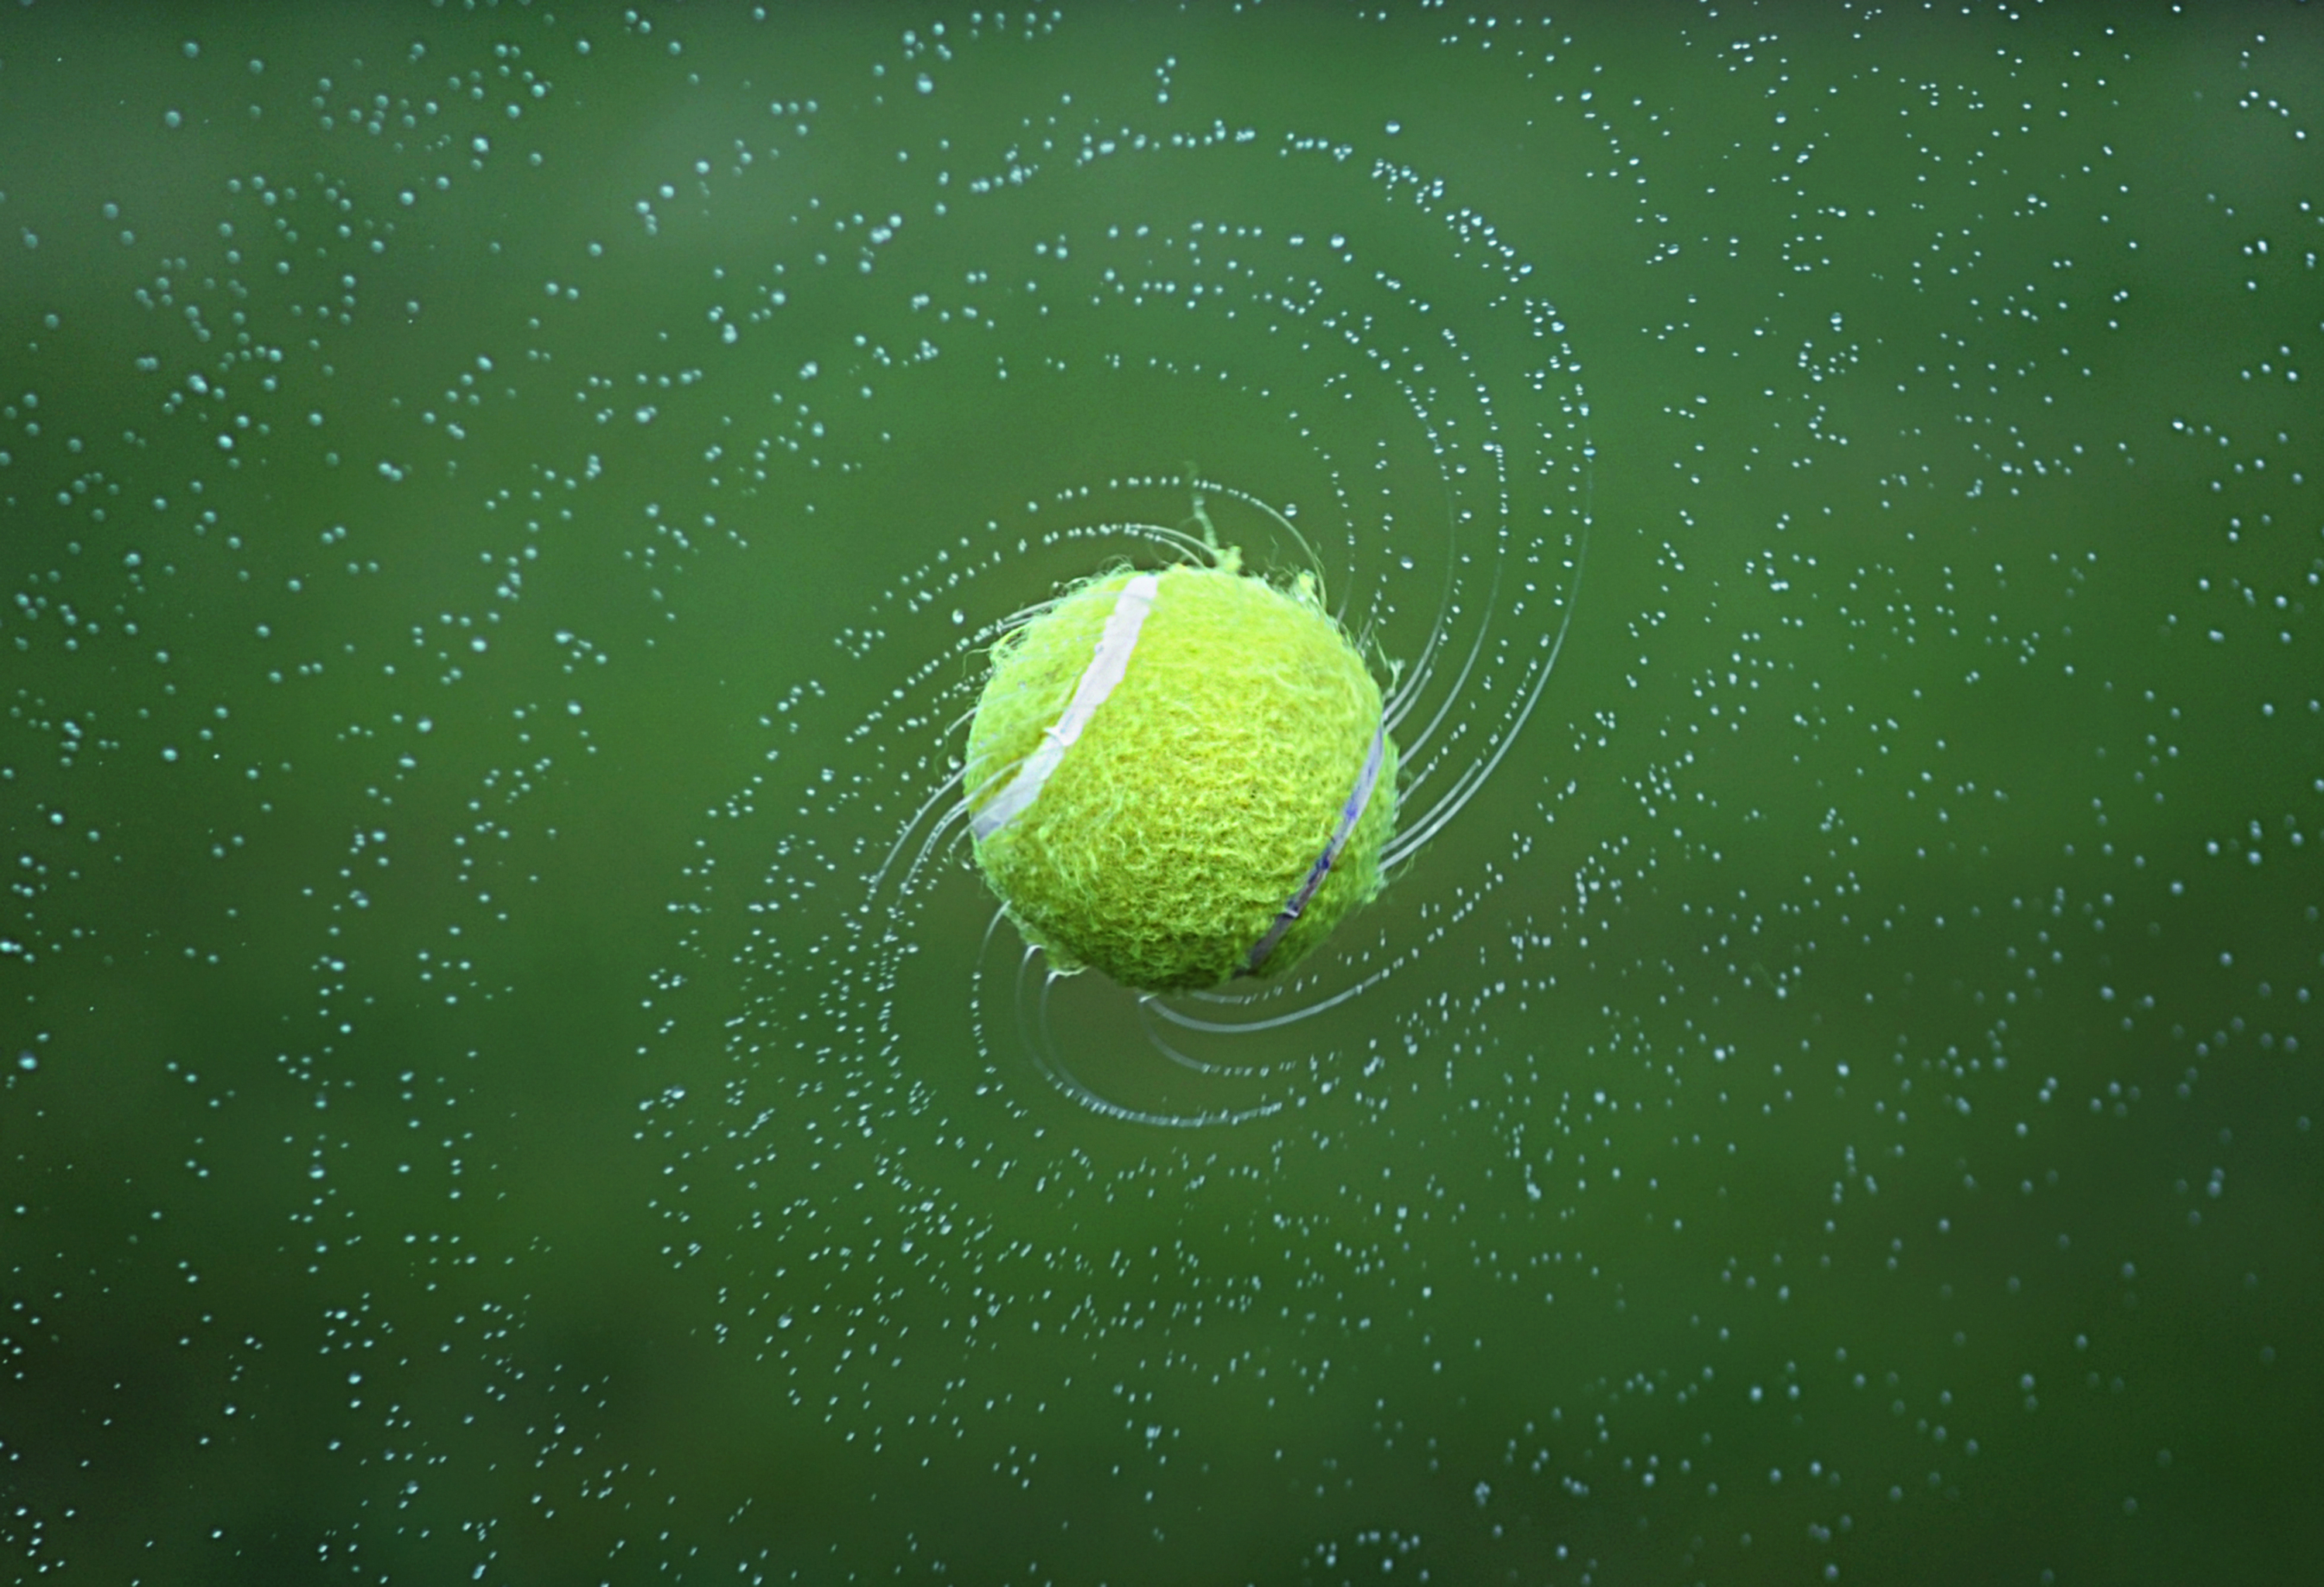 stock-photo-galactic-tennis-ball-144548057.jpg